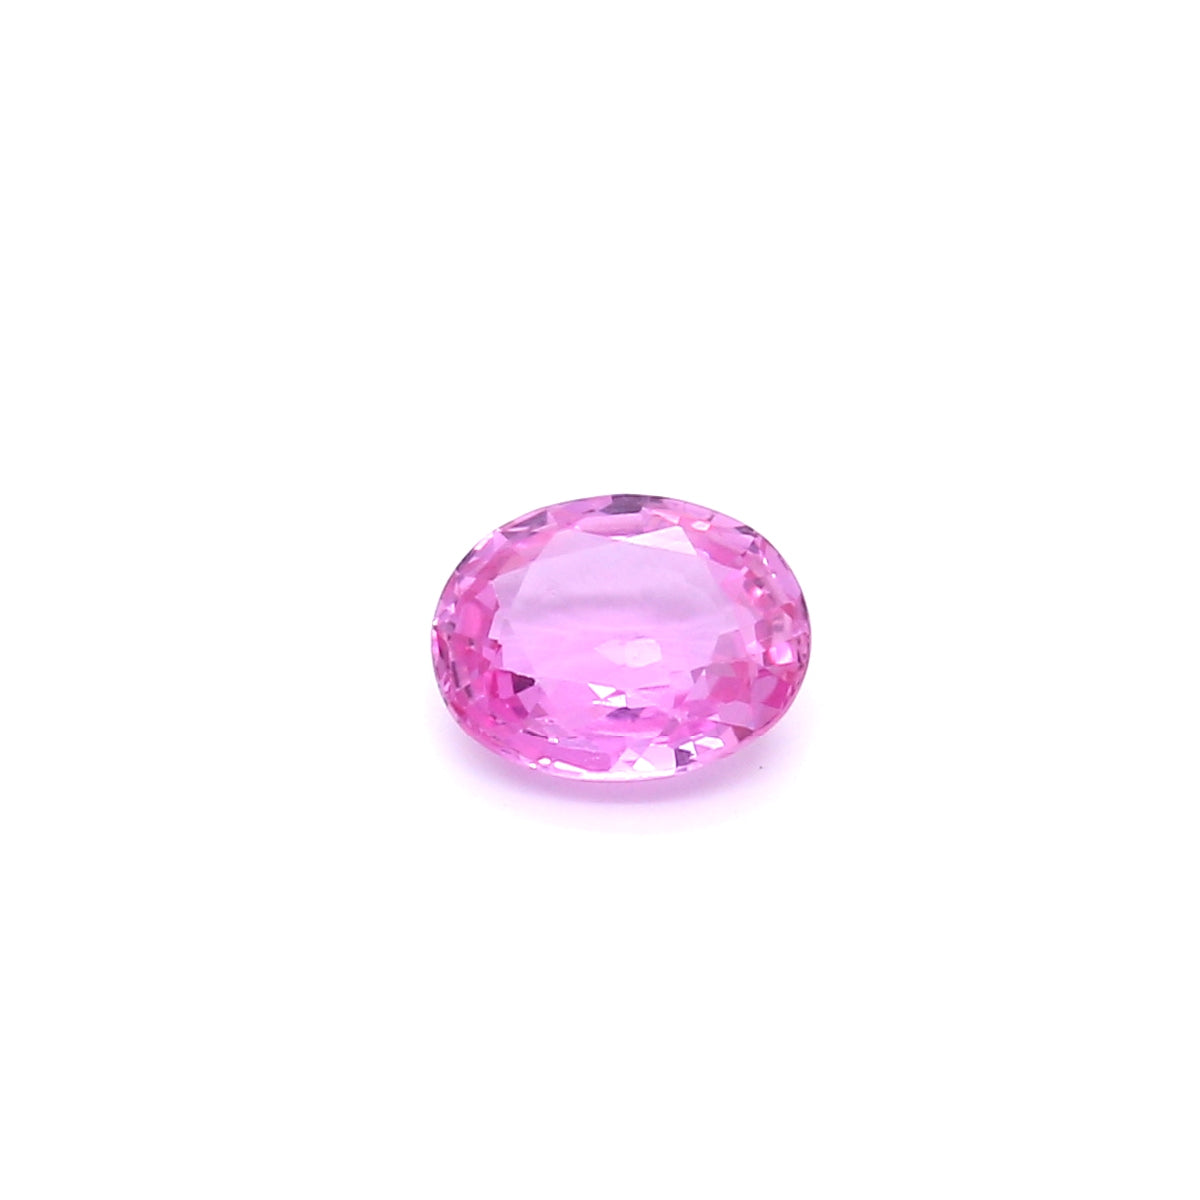 1.01ct Pink, Oval Sapphire, No Heat, Madagascar - 6.69 x 5.35 x 2.89mm